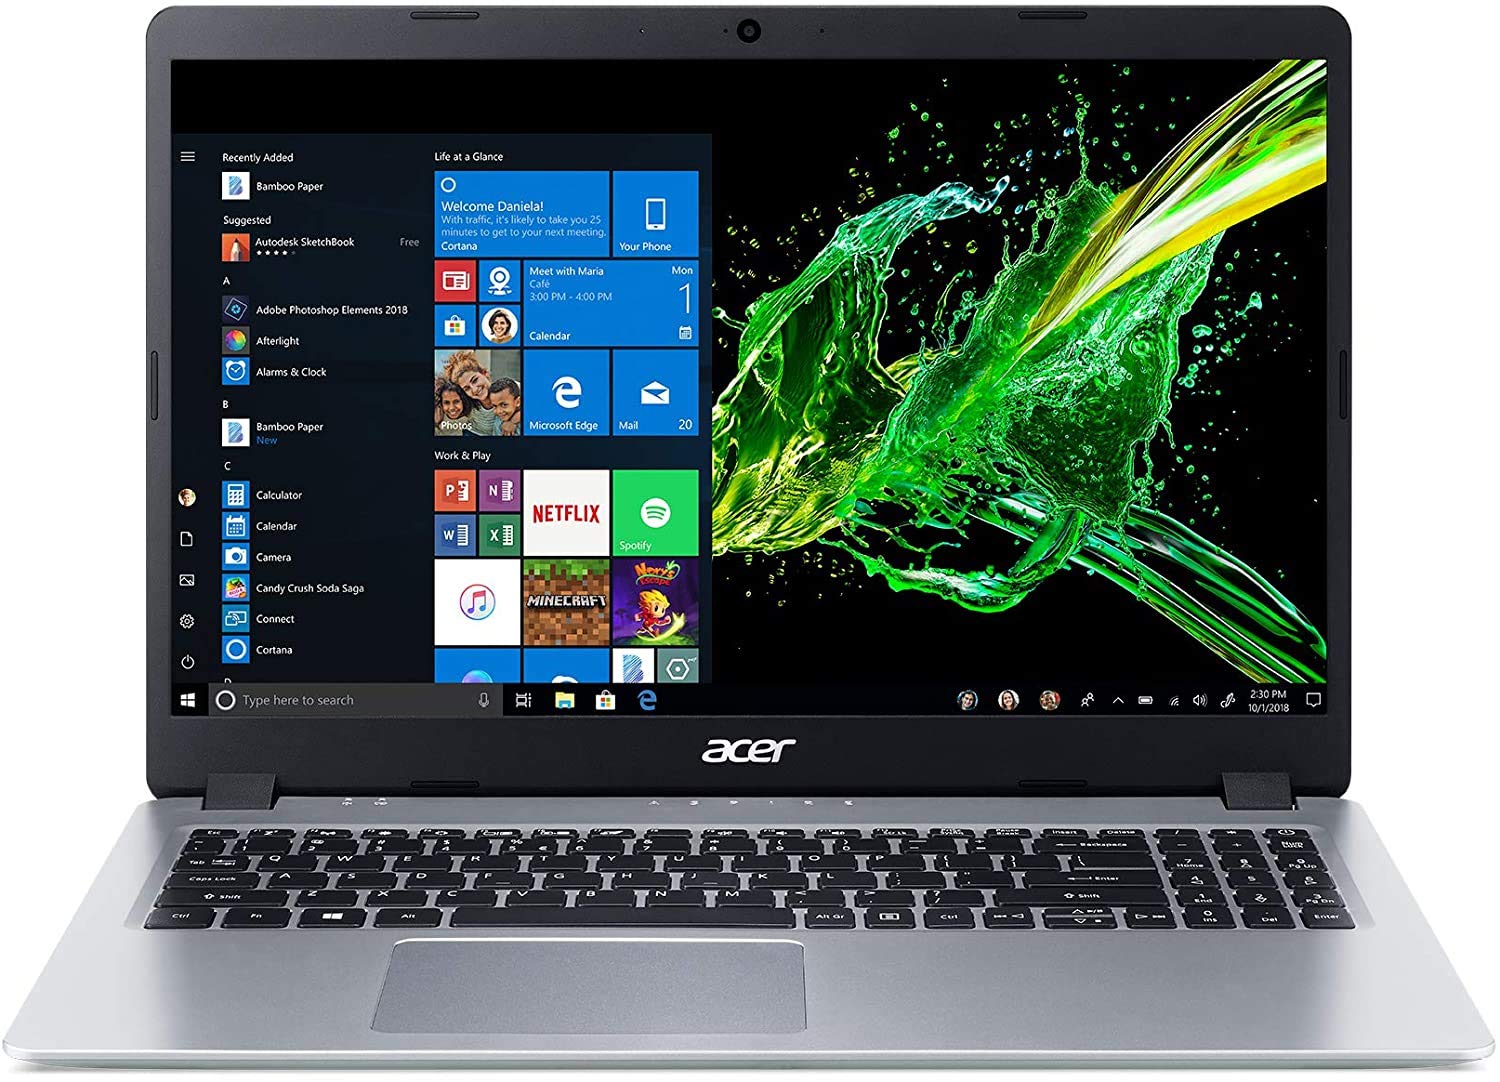 2021 Newest Acer Aspire 5 Slim Laptop, 15.6 inches Full HD IPS Display, AMD Ryzen 3 3200U, Vega 3 Graphics, 8GB DDR4, 128GB SSD, Backlit Keyboard, Windows 10 + Nly MP